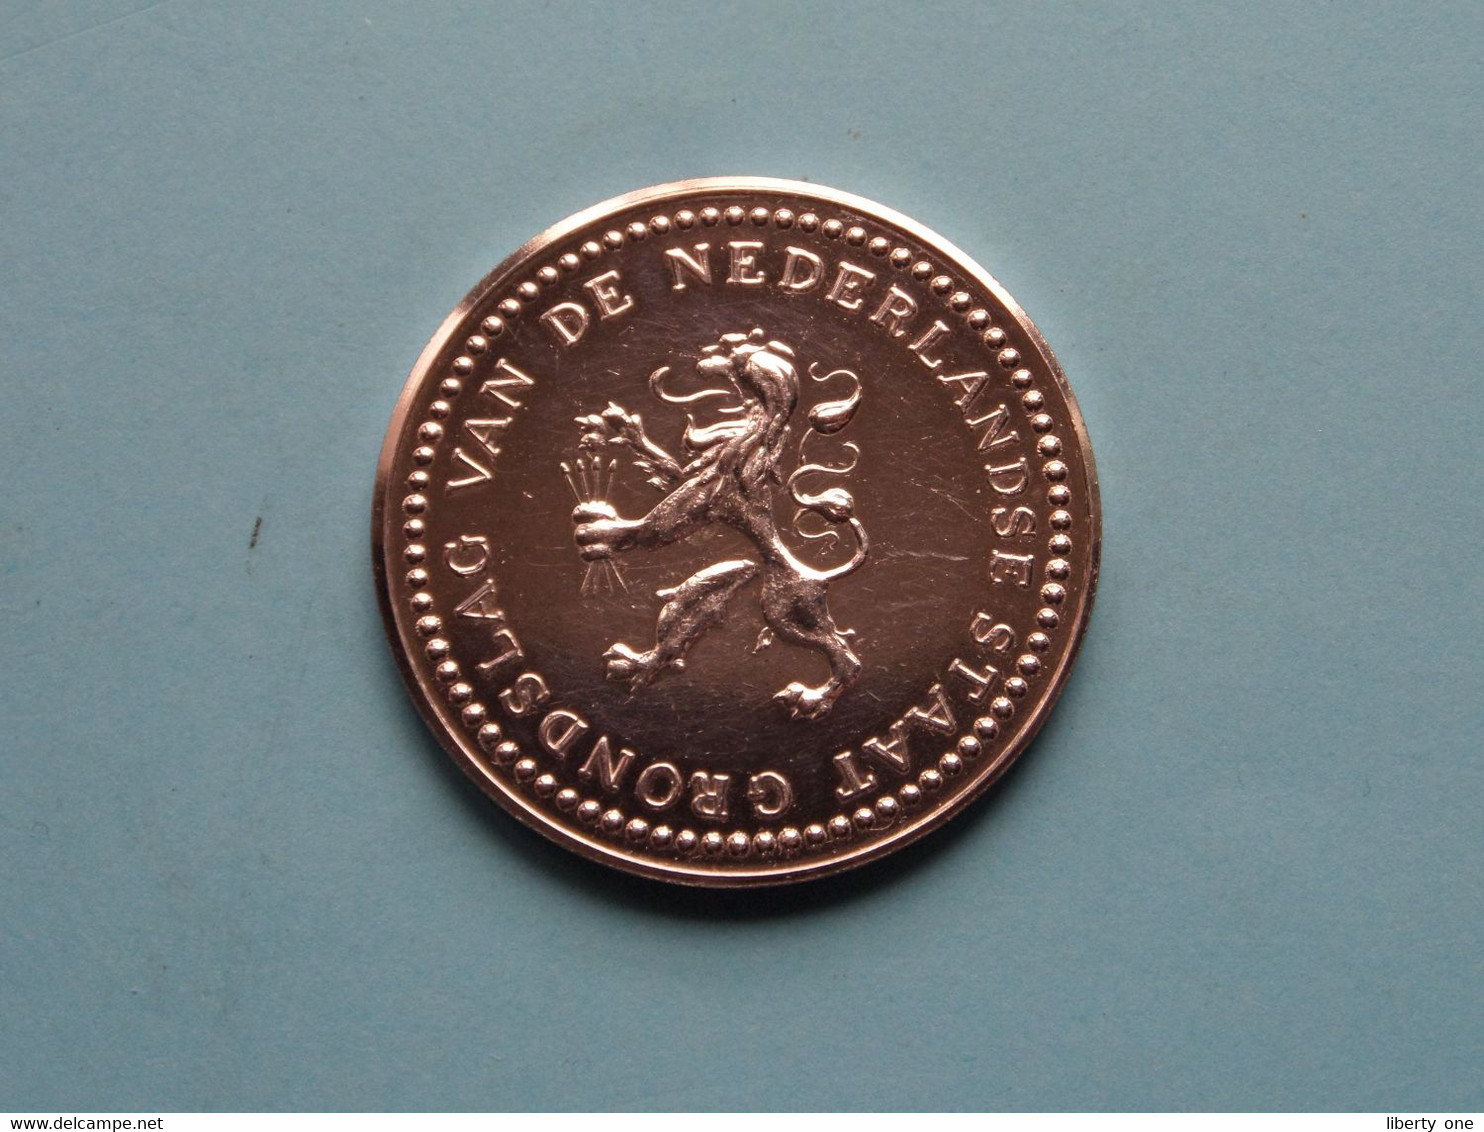 23 JANUARI 1579 - GRONDSLAG VAN DE NEDERLANDSE STAAT ( See SCANS ) 38 Mm.! - Souvenirmunten (elongated Coins)